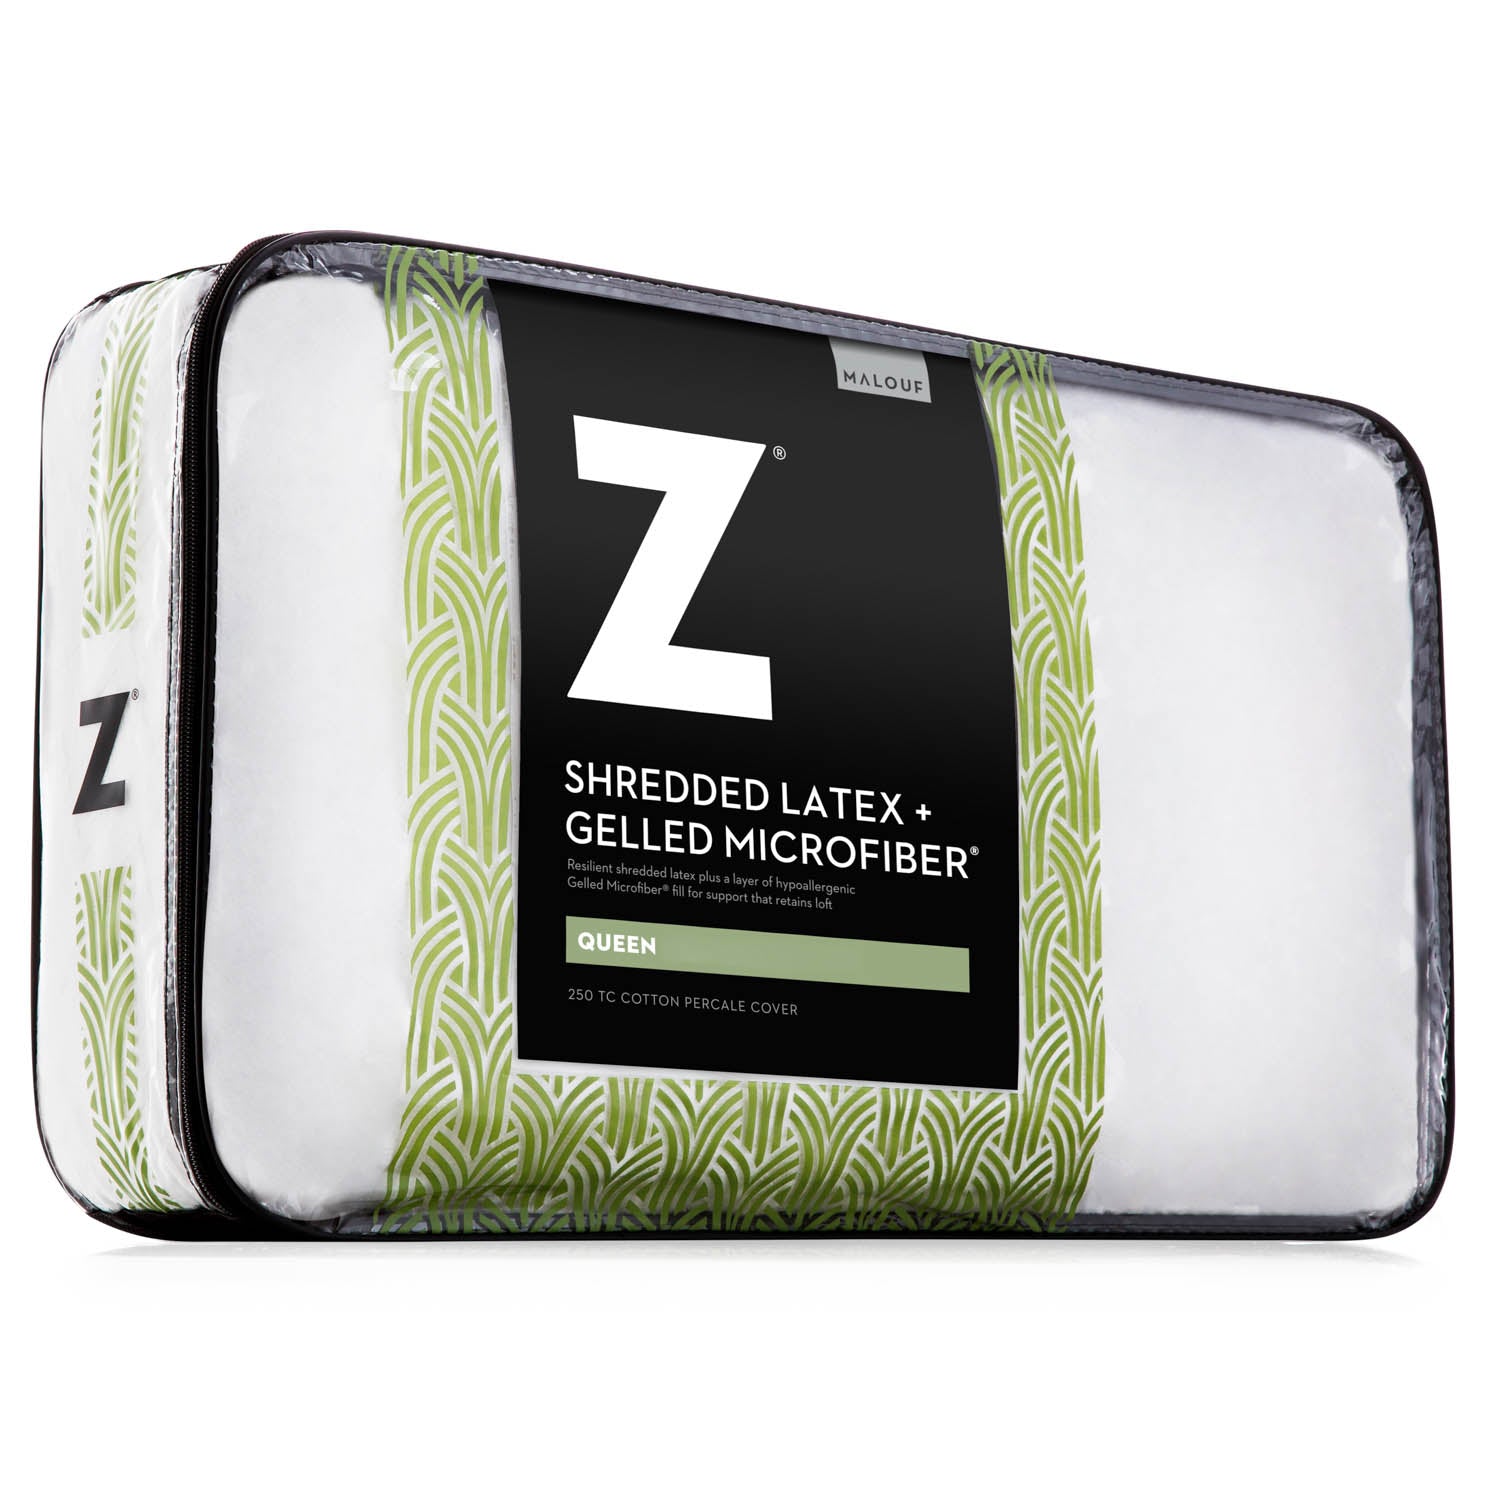 Shredded Latex + Gelled Microfiber Pillow - Ultimate Comfort Sleep